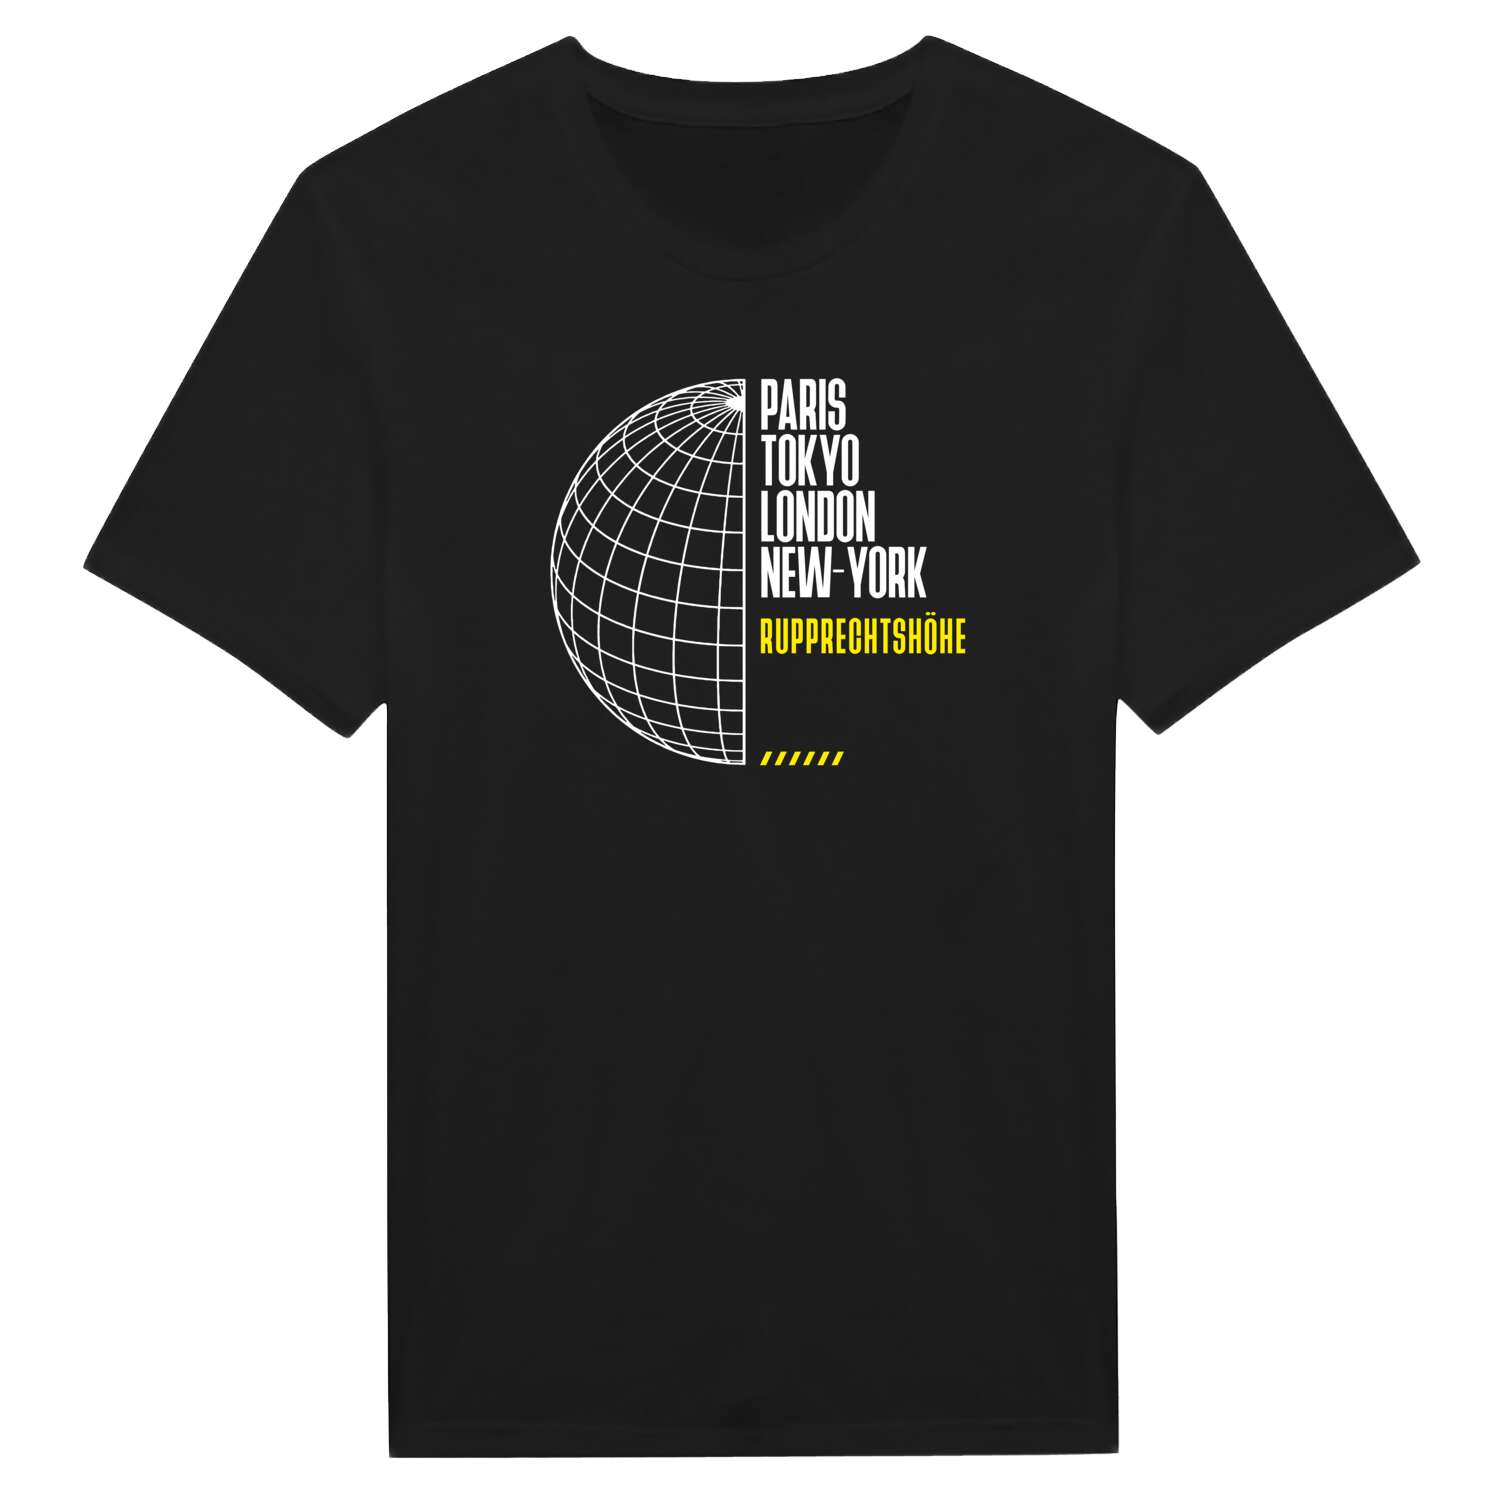 Rupprechtshöhe T-Shirt »Paris Tokyo London«